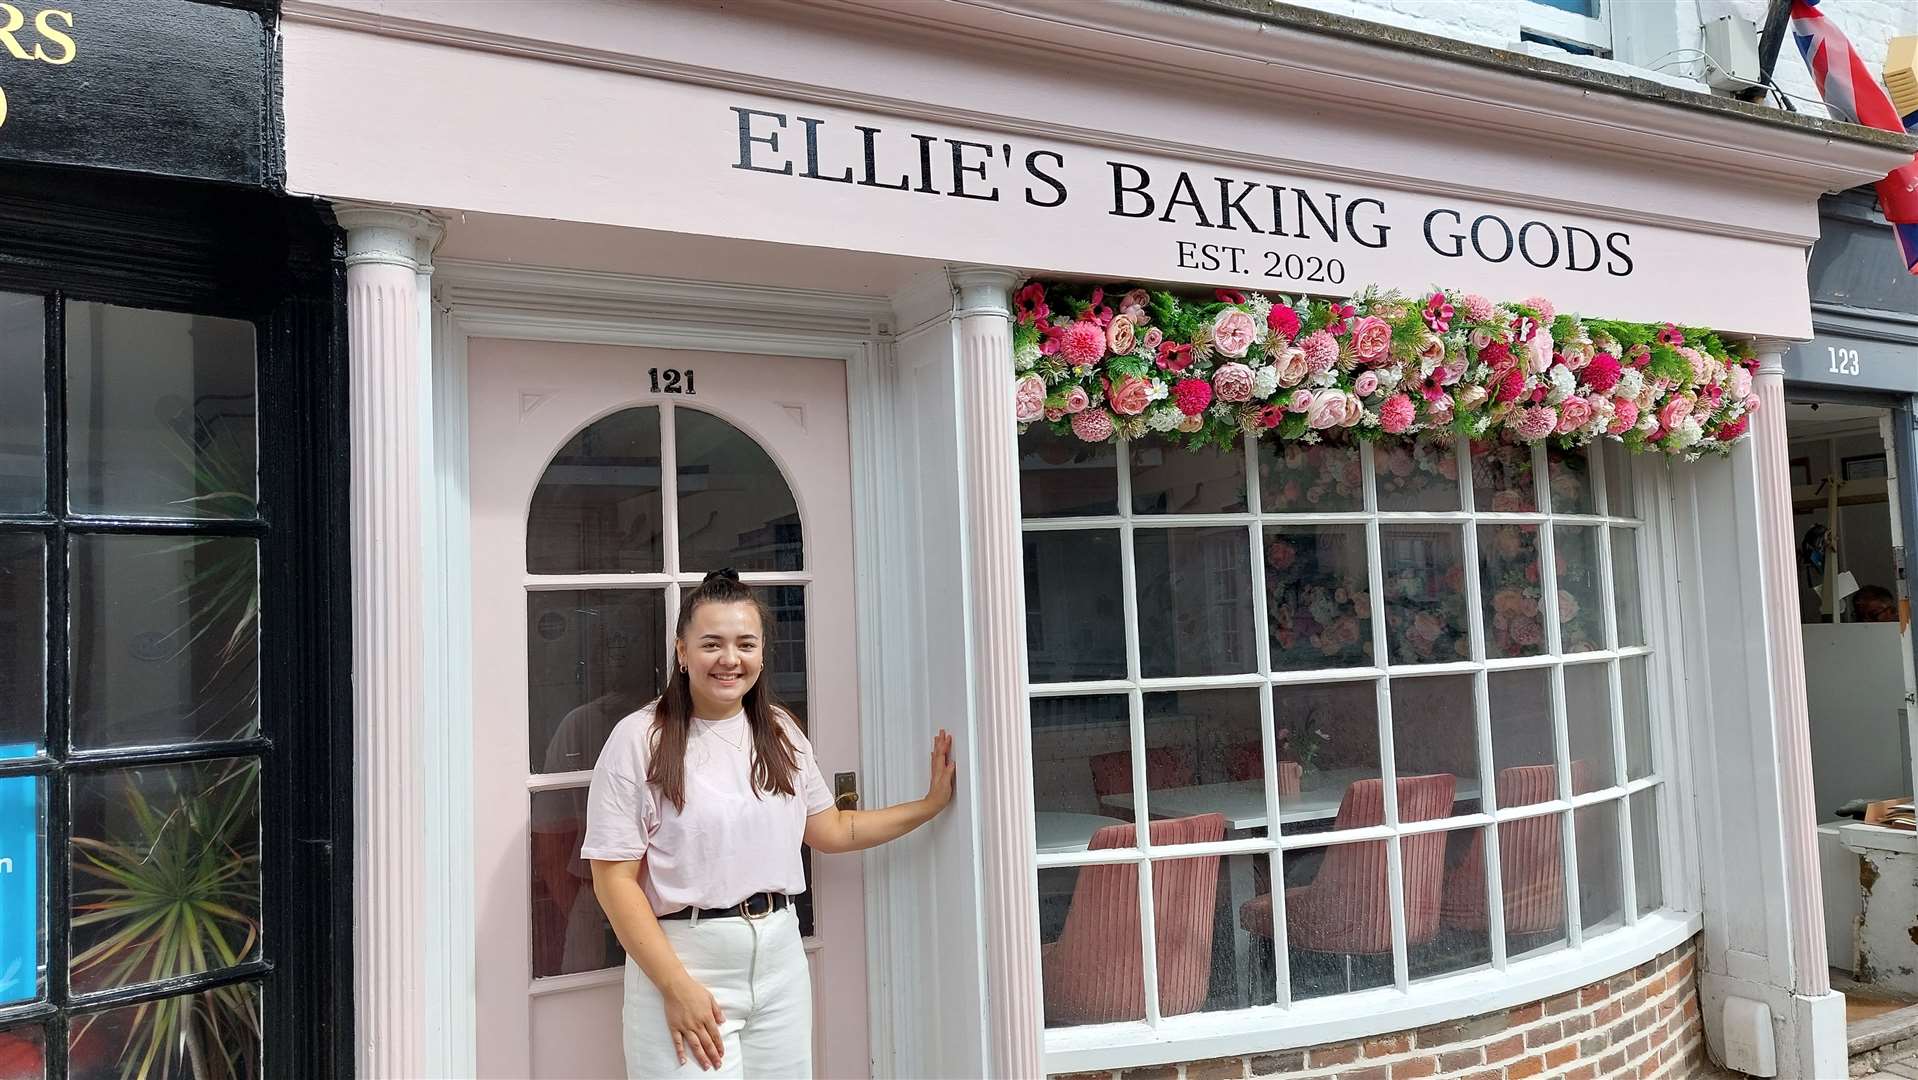 Ellie Miller from Ashford has opened Ellie's Baking Goods in Hythe